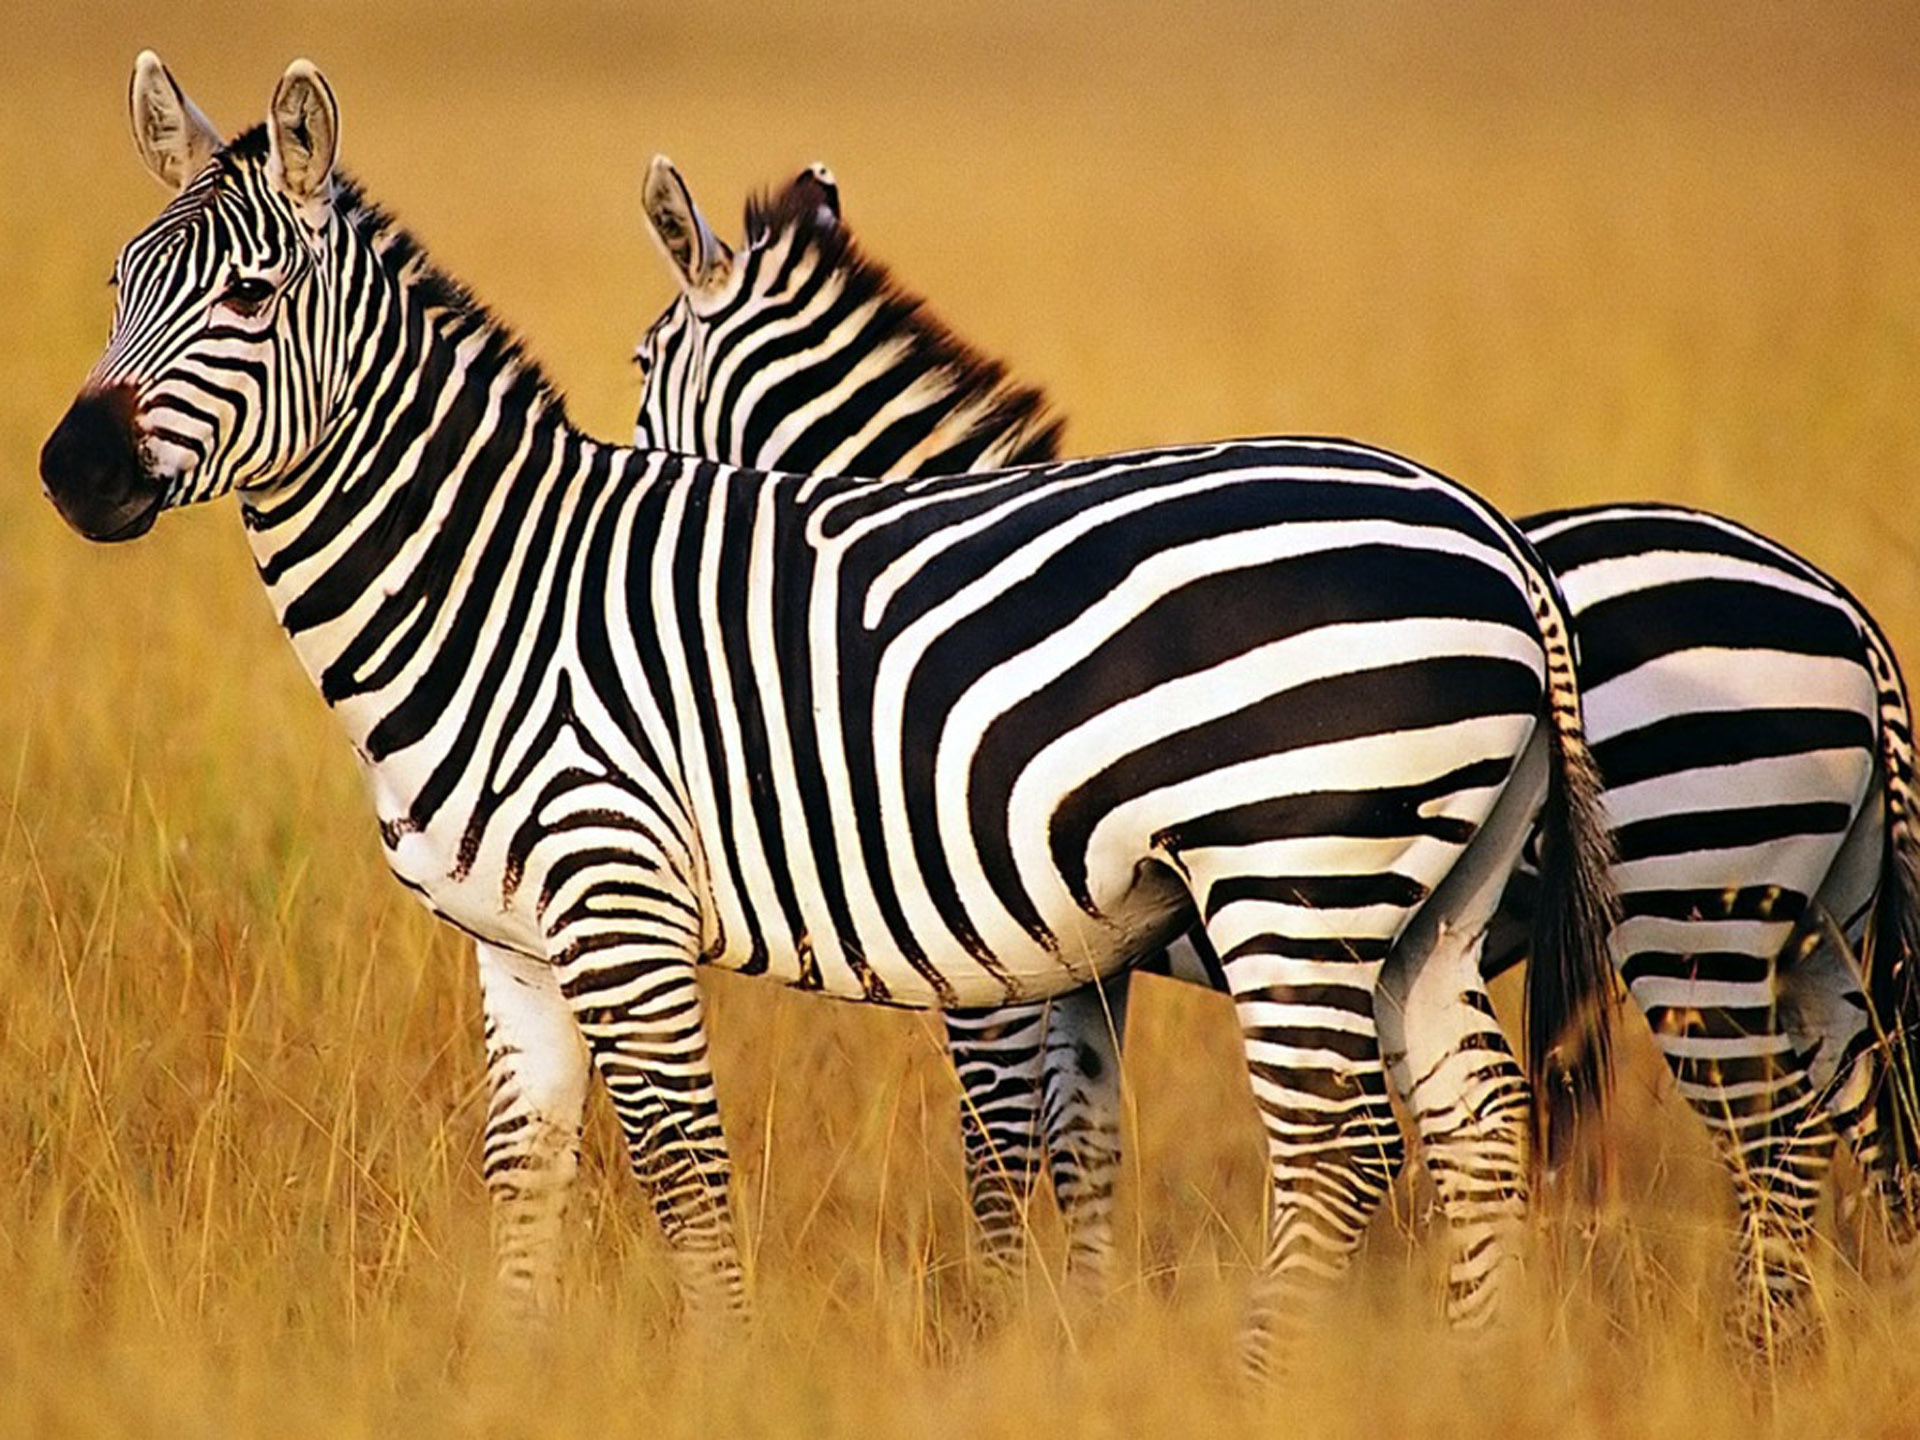 Zebra animal wallpapers, Top background choices, Stunning zebra images, Captivating creature, 1920x1440 HD Desktop